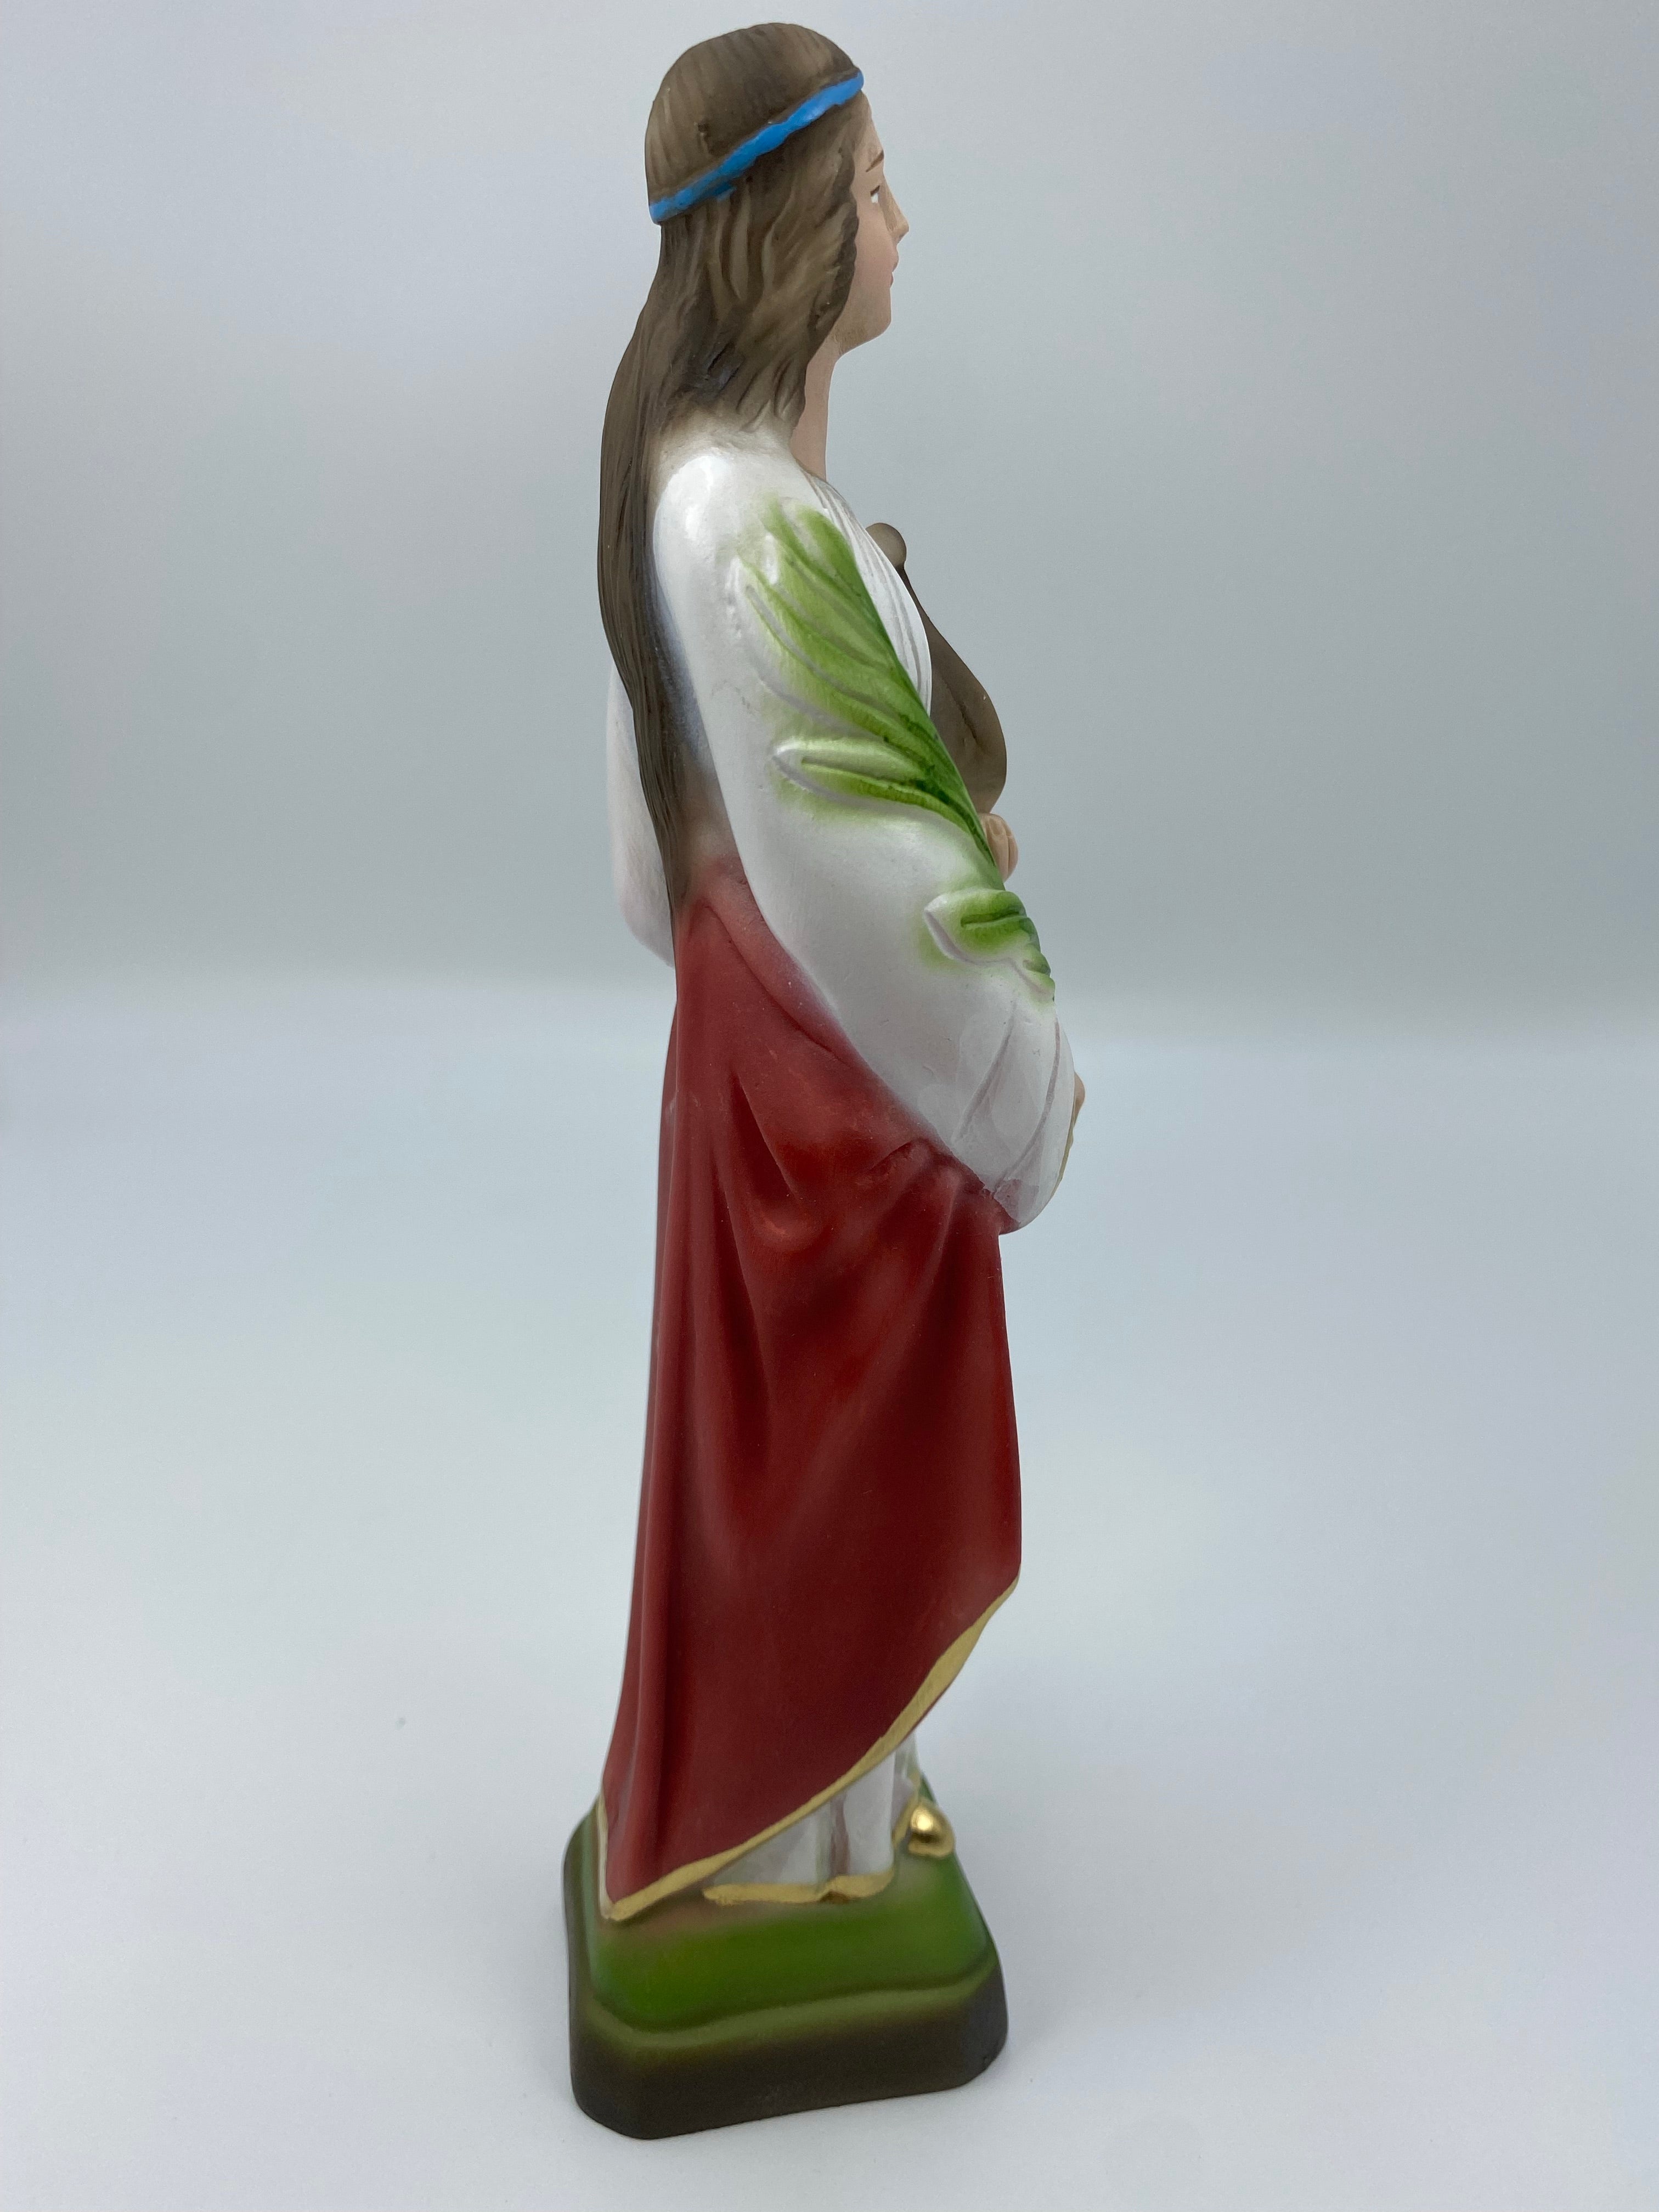 The Faith Gift Saint Cecilia - Hand Painted in Italy - Our Tuscany Collection -Estatua de Santa Cecilia